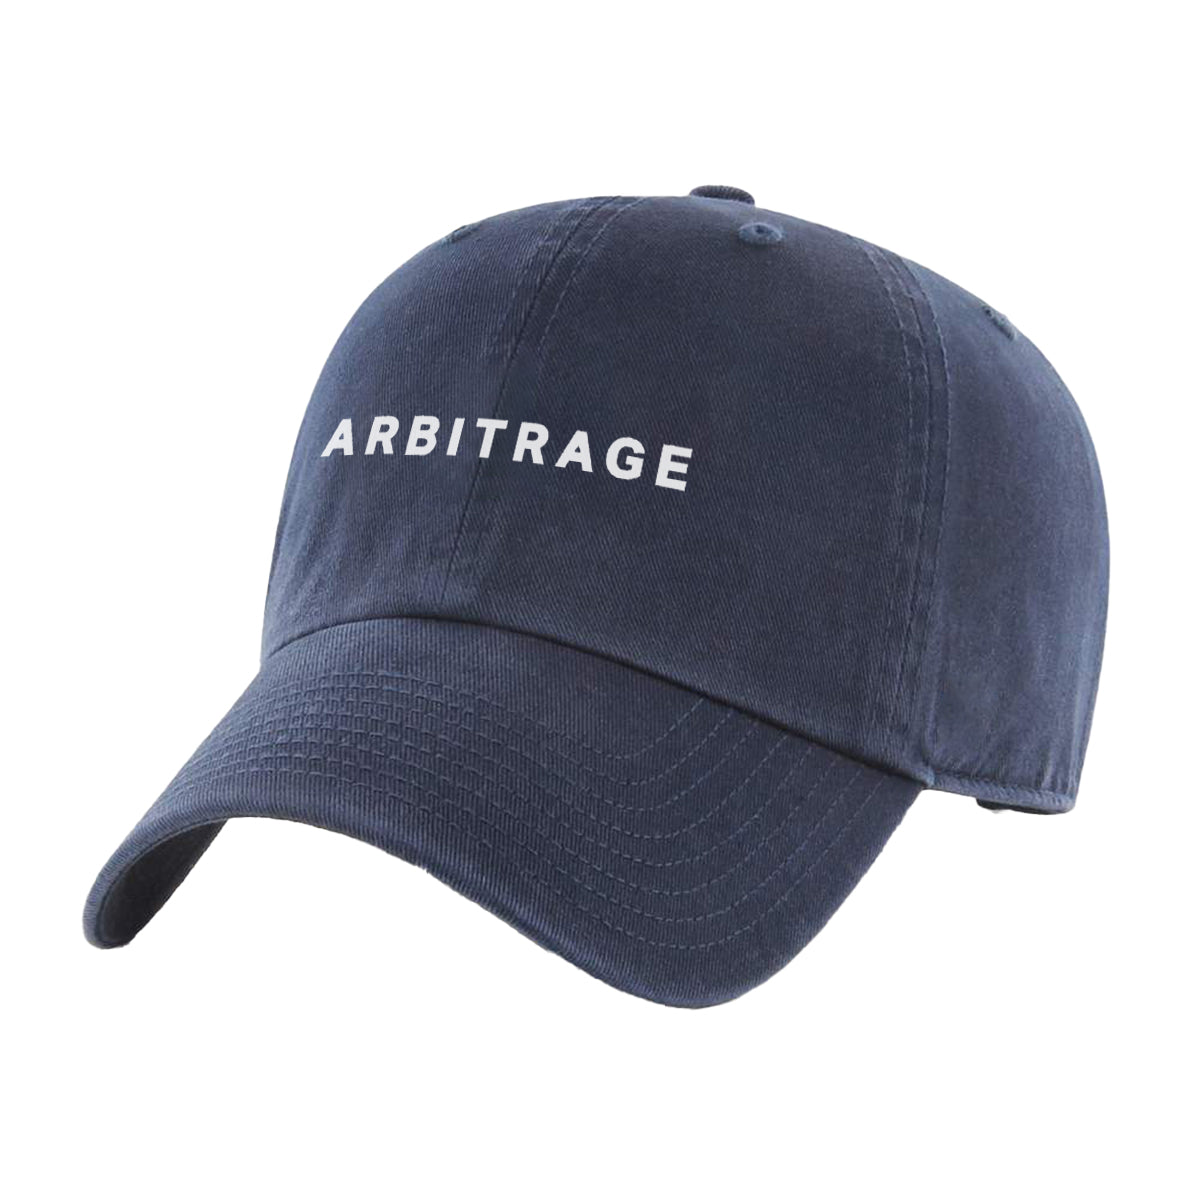 Arbitrage Hat